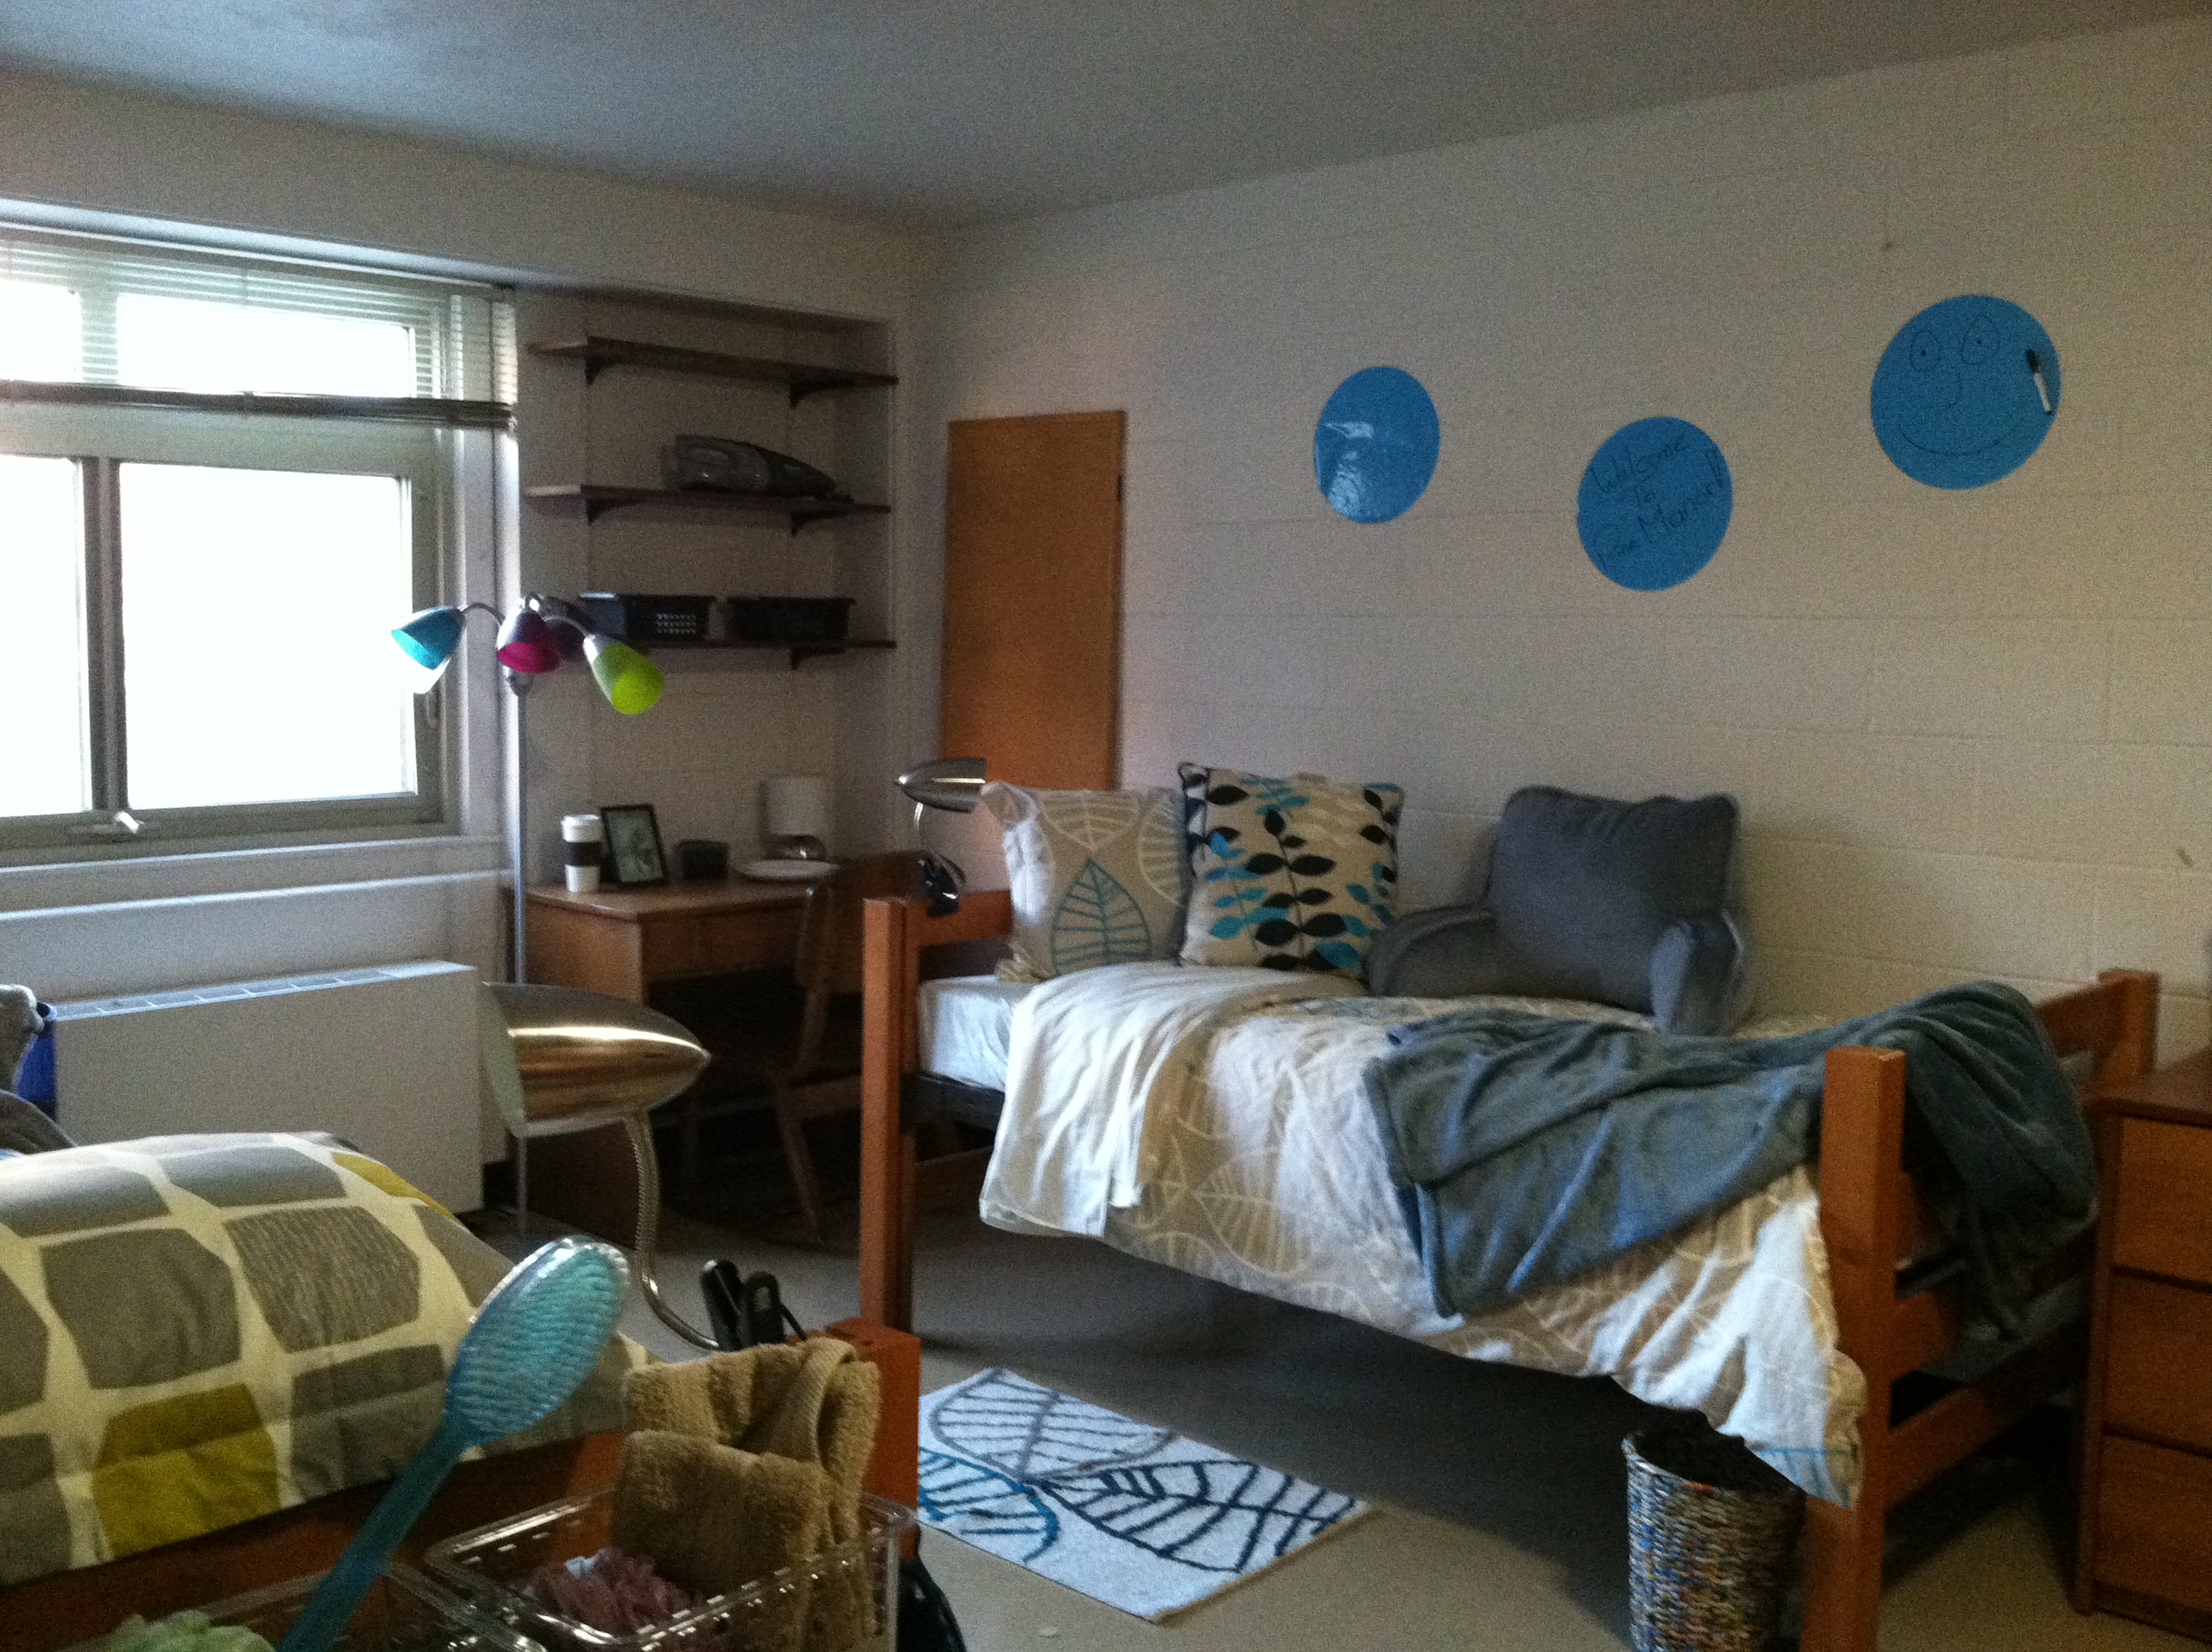 An image of a dorm